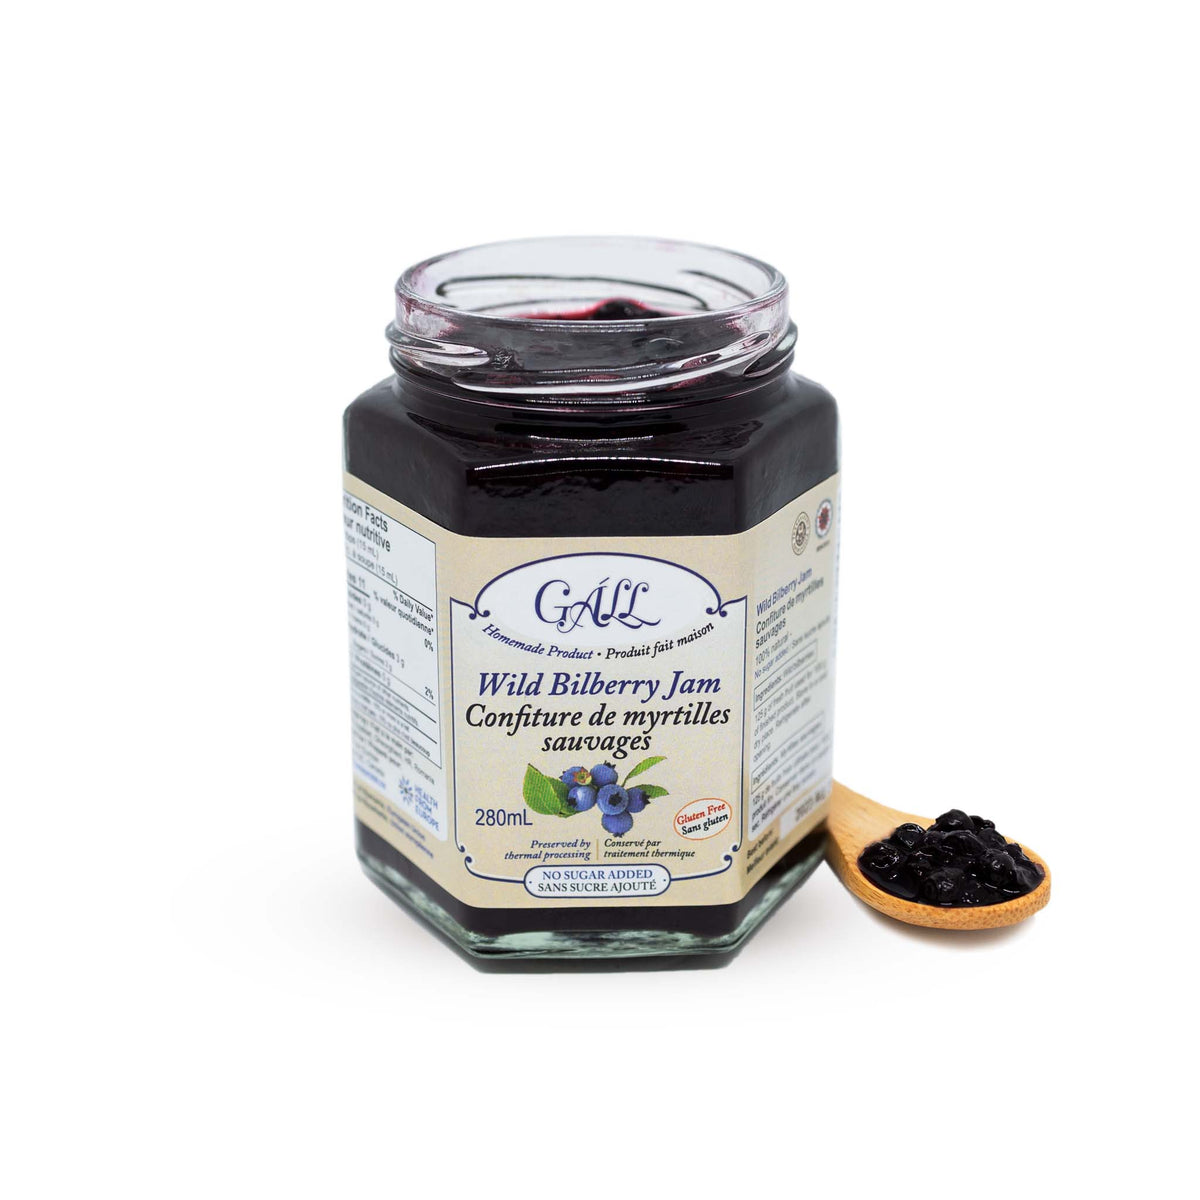 Artisanal No Sugar Added Wild Bilberry Jam open jar spoon Health from Europe